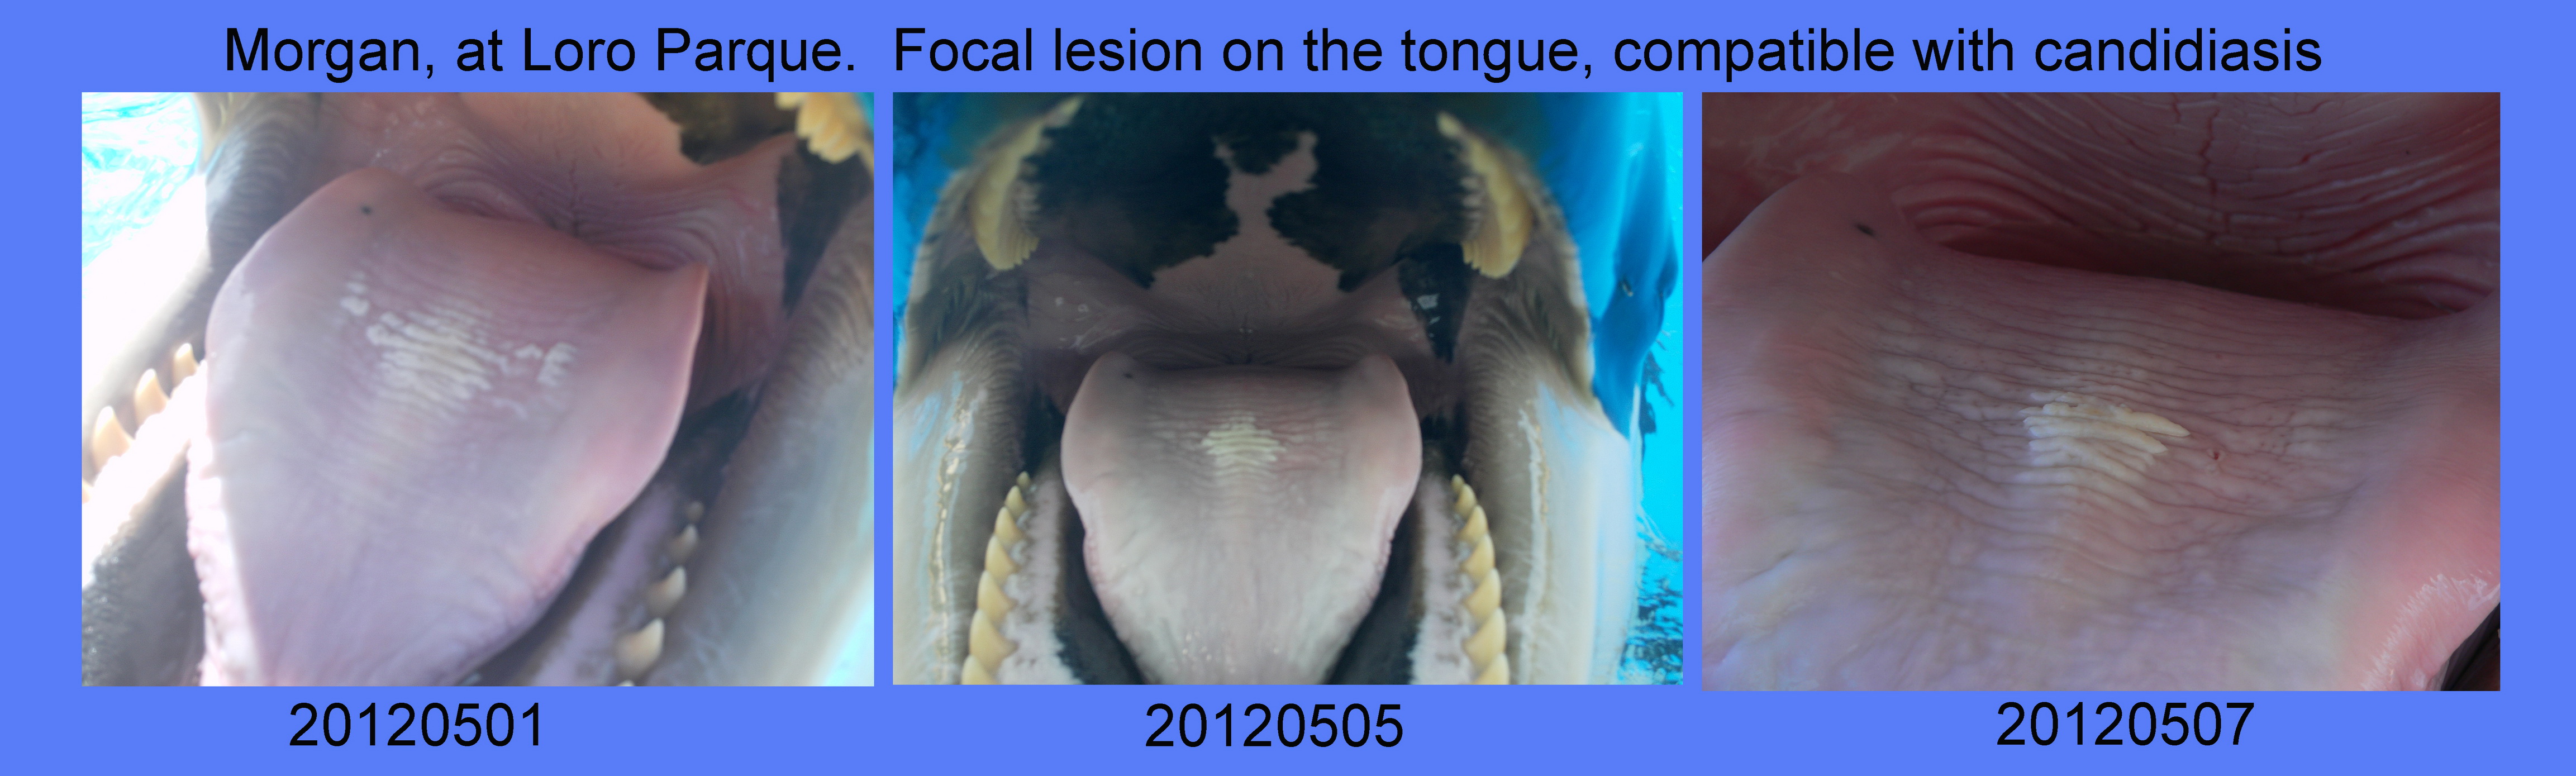 Candidiasis on the tongue of Morgan, while at Loro Parque, 1, 5 & 7 May 2012